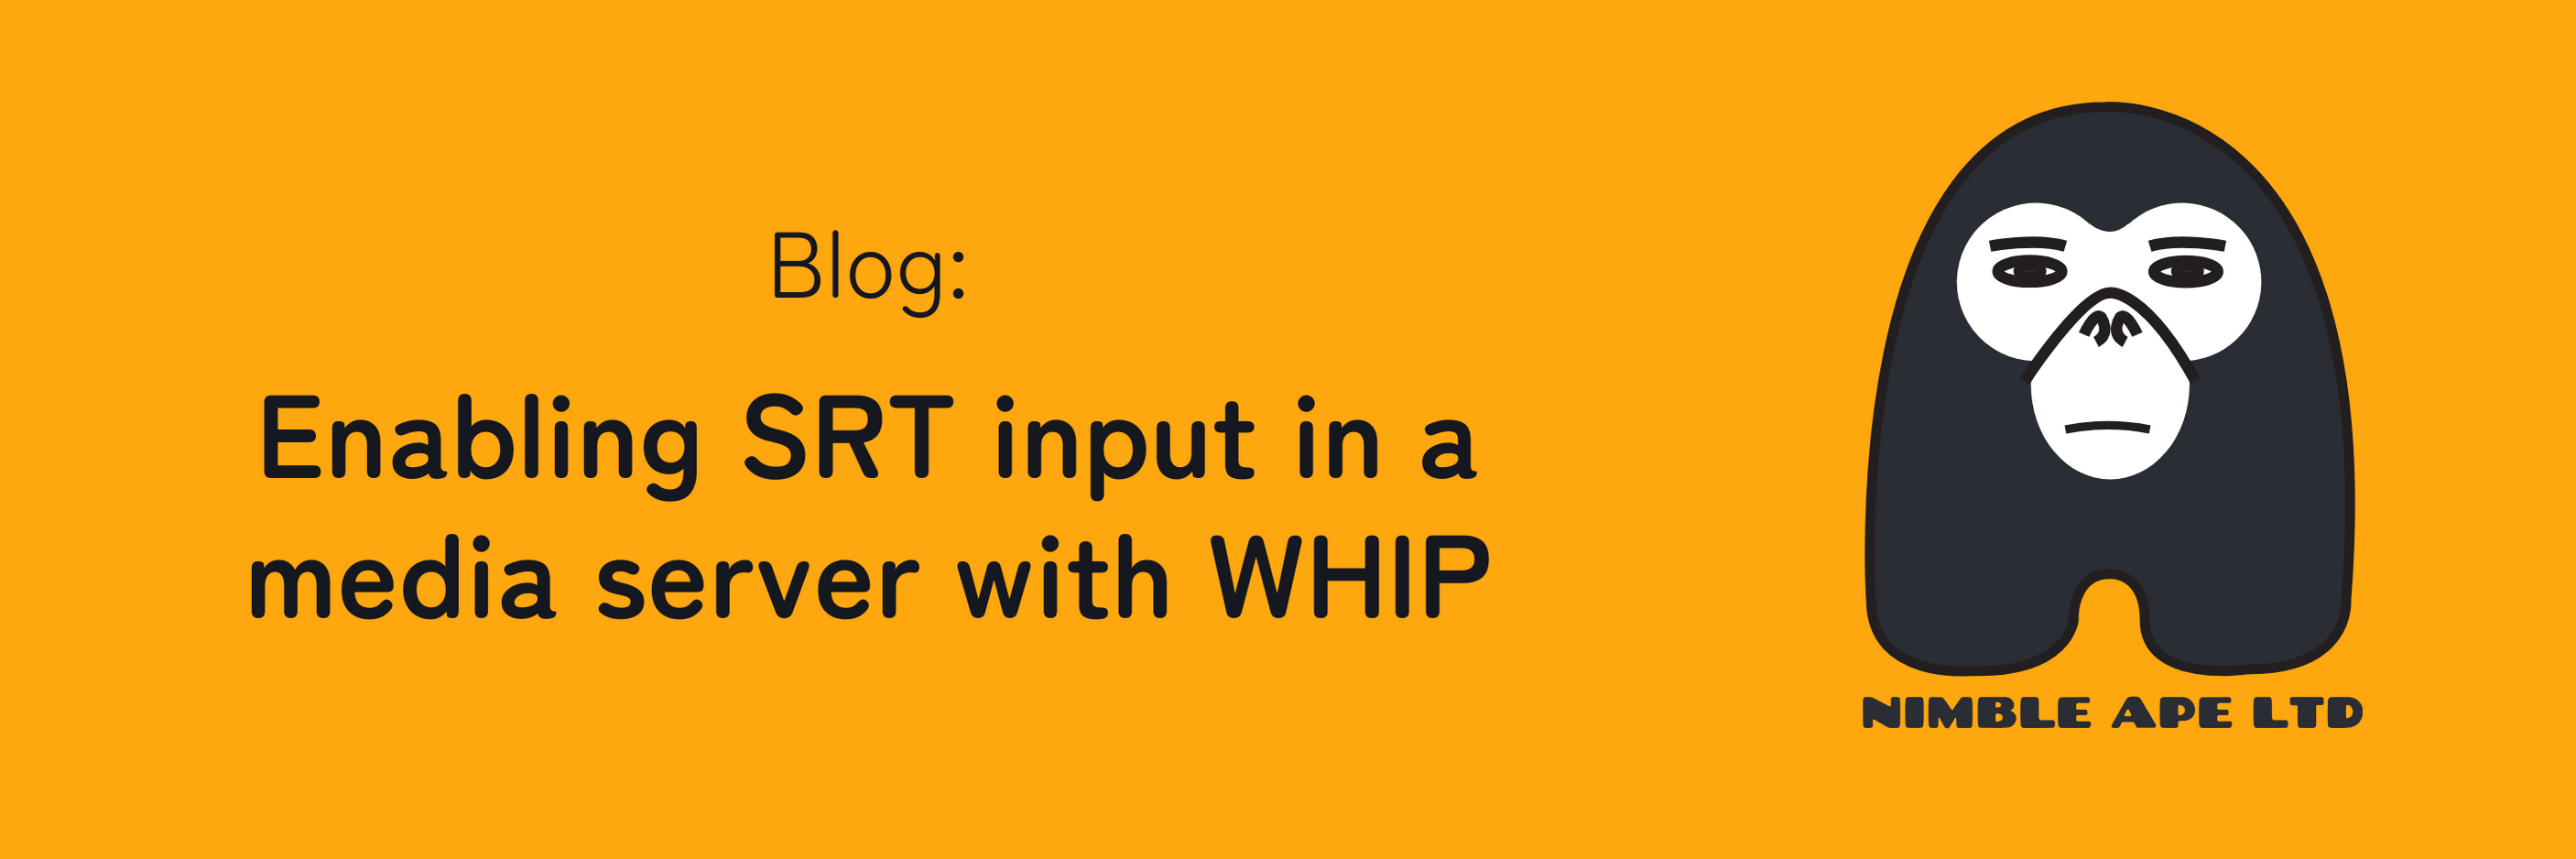 Hero image: Nimble Ape, enabling SRT input via WHIP in a media server